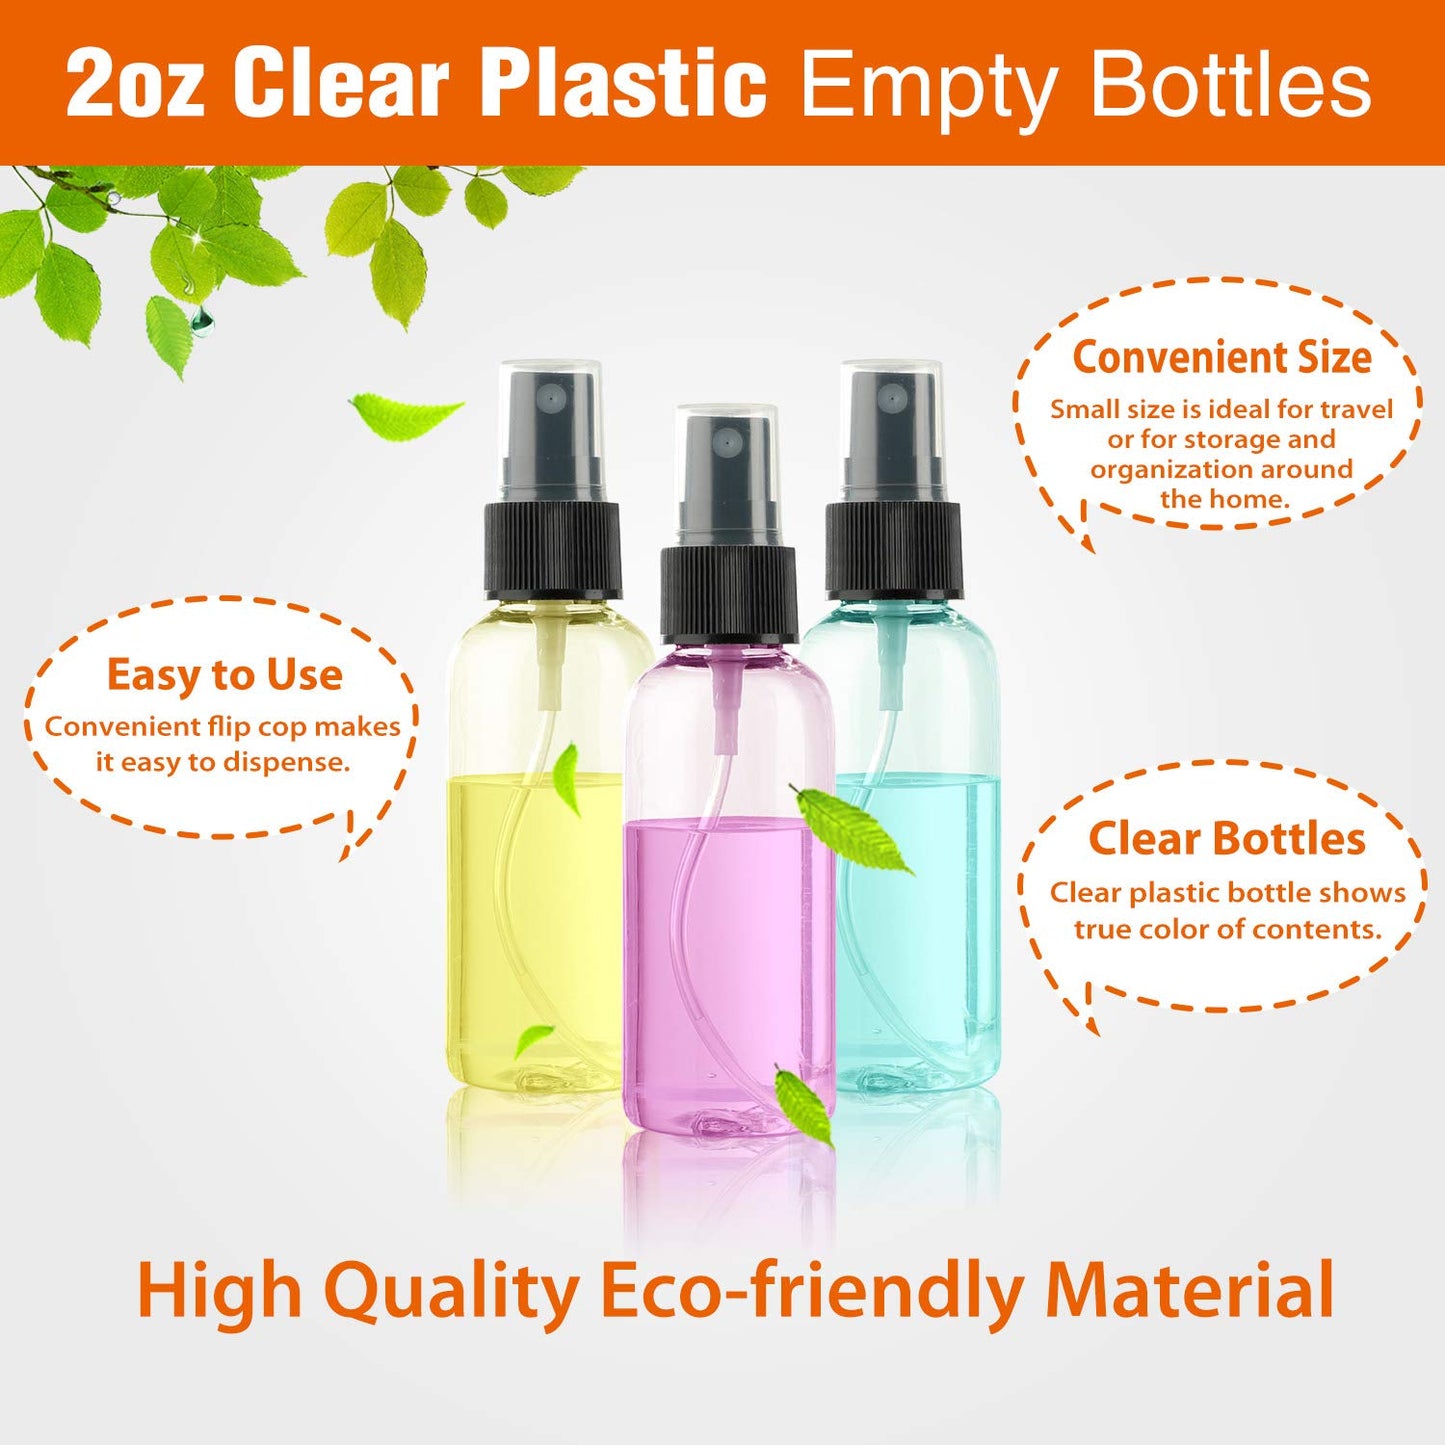 30 Pack 2 oz Fine Mist Mini Clear Spray Bottles with Pump Spray Cap - for Essential Oils, Travel, Perfumes - Refillable & Reusable Empty Plastic Bottles Travel Bottle